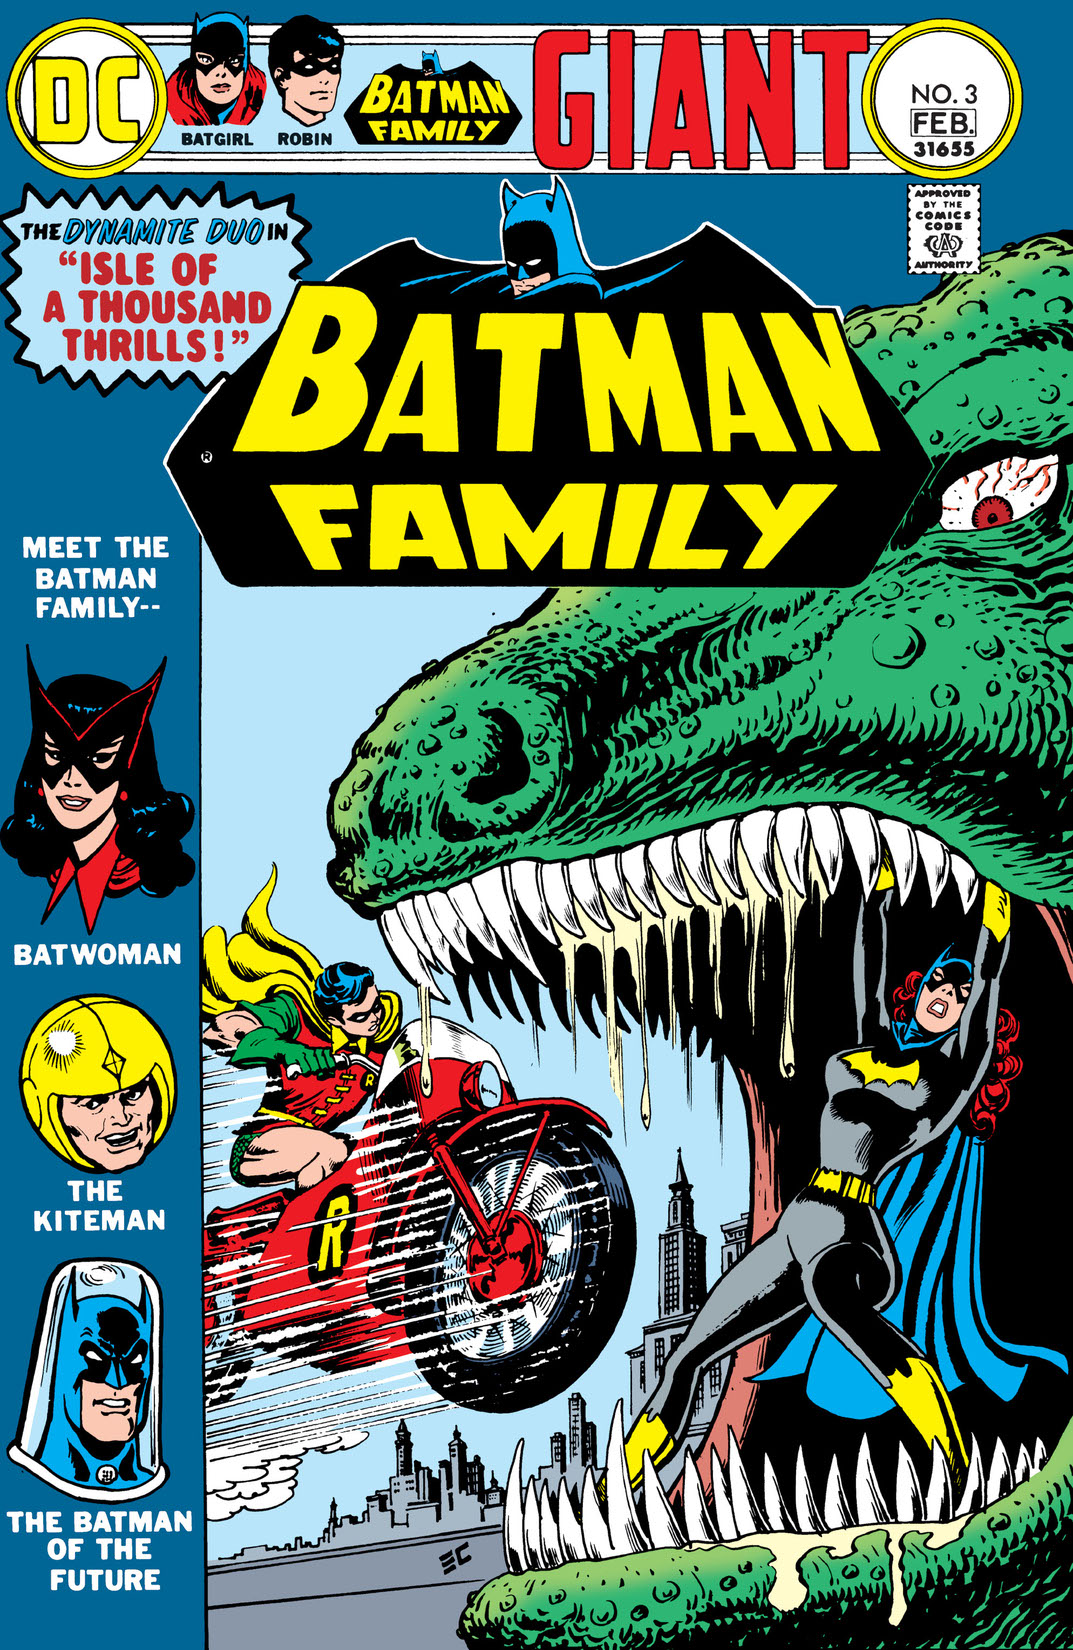 Batman Family #3 preview images